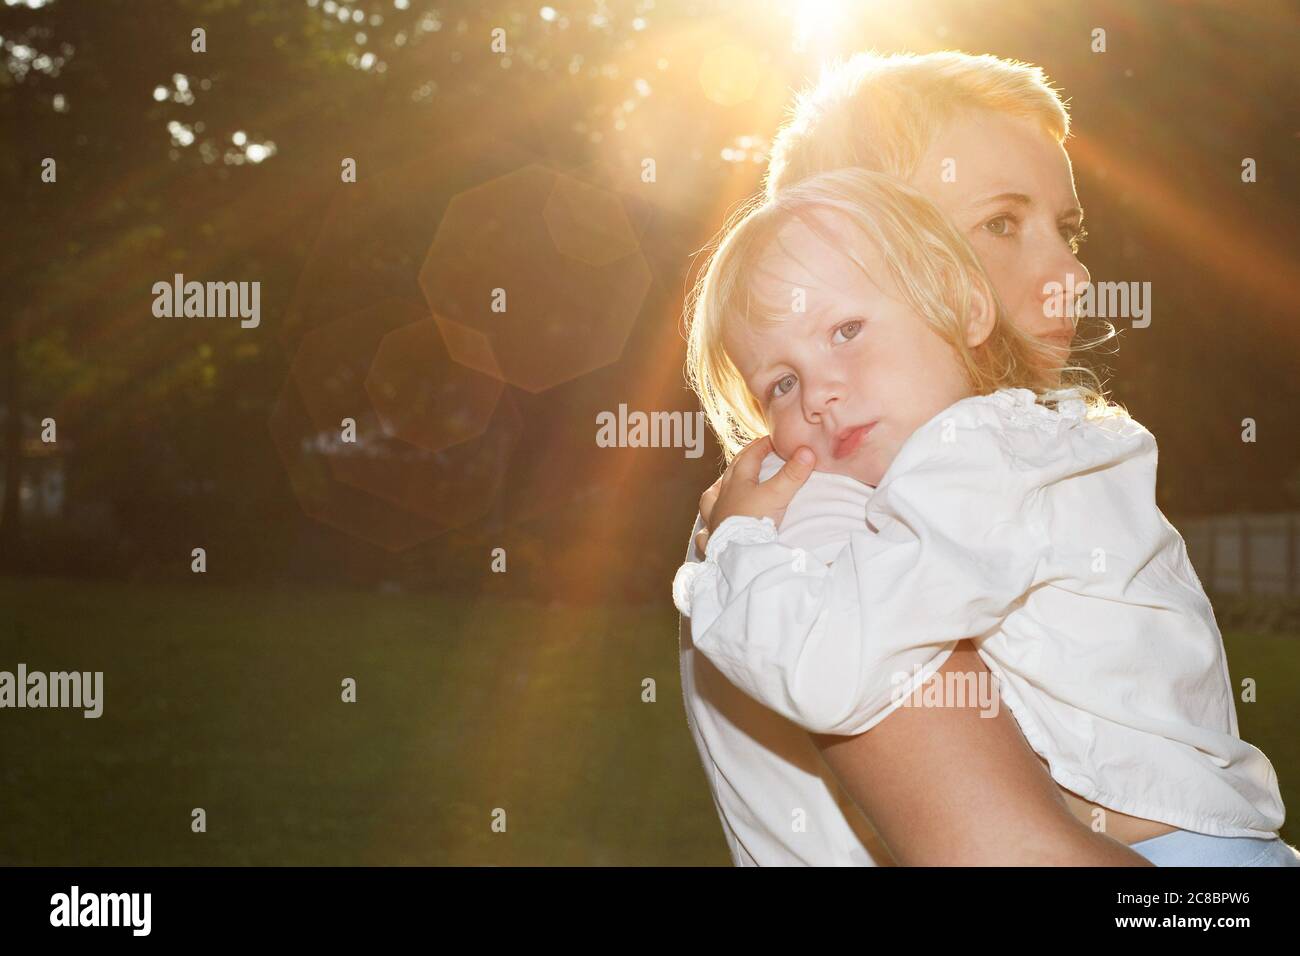 Mother hugging child in summer scene Stock Photo